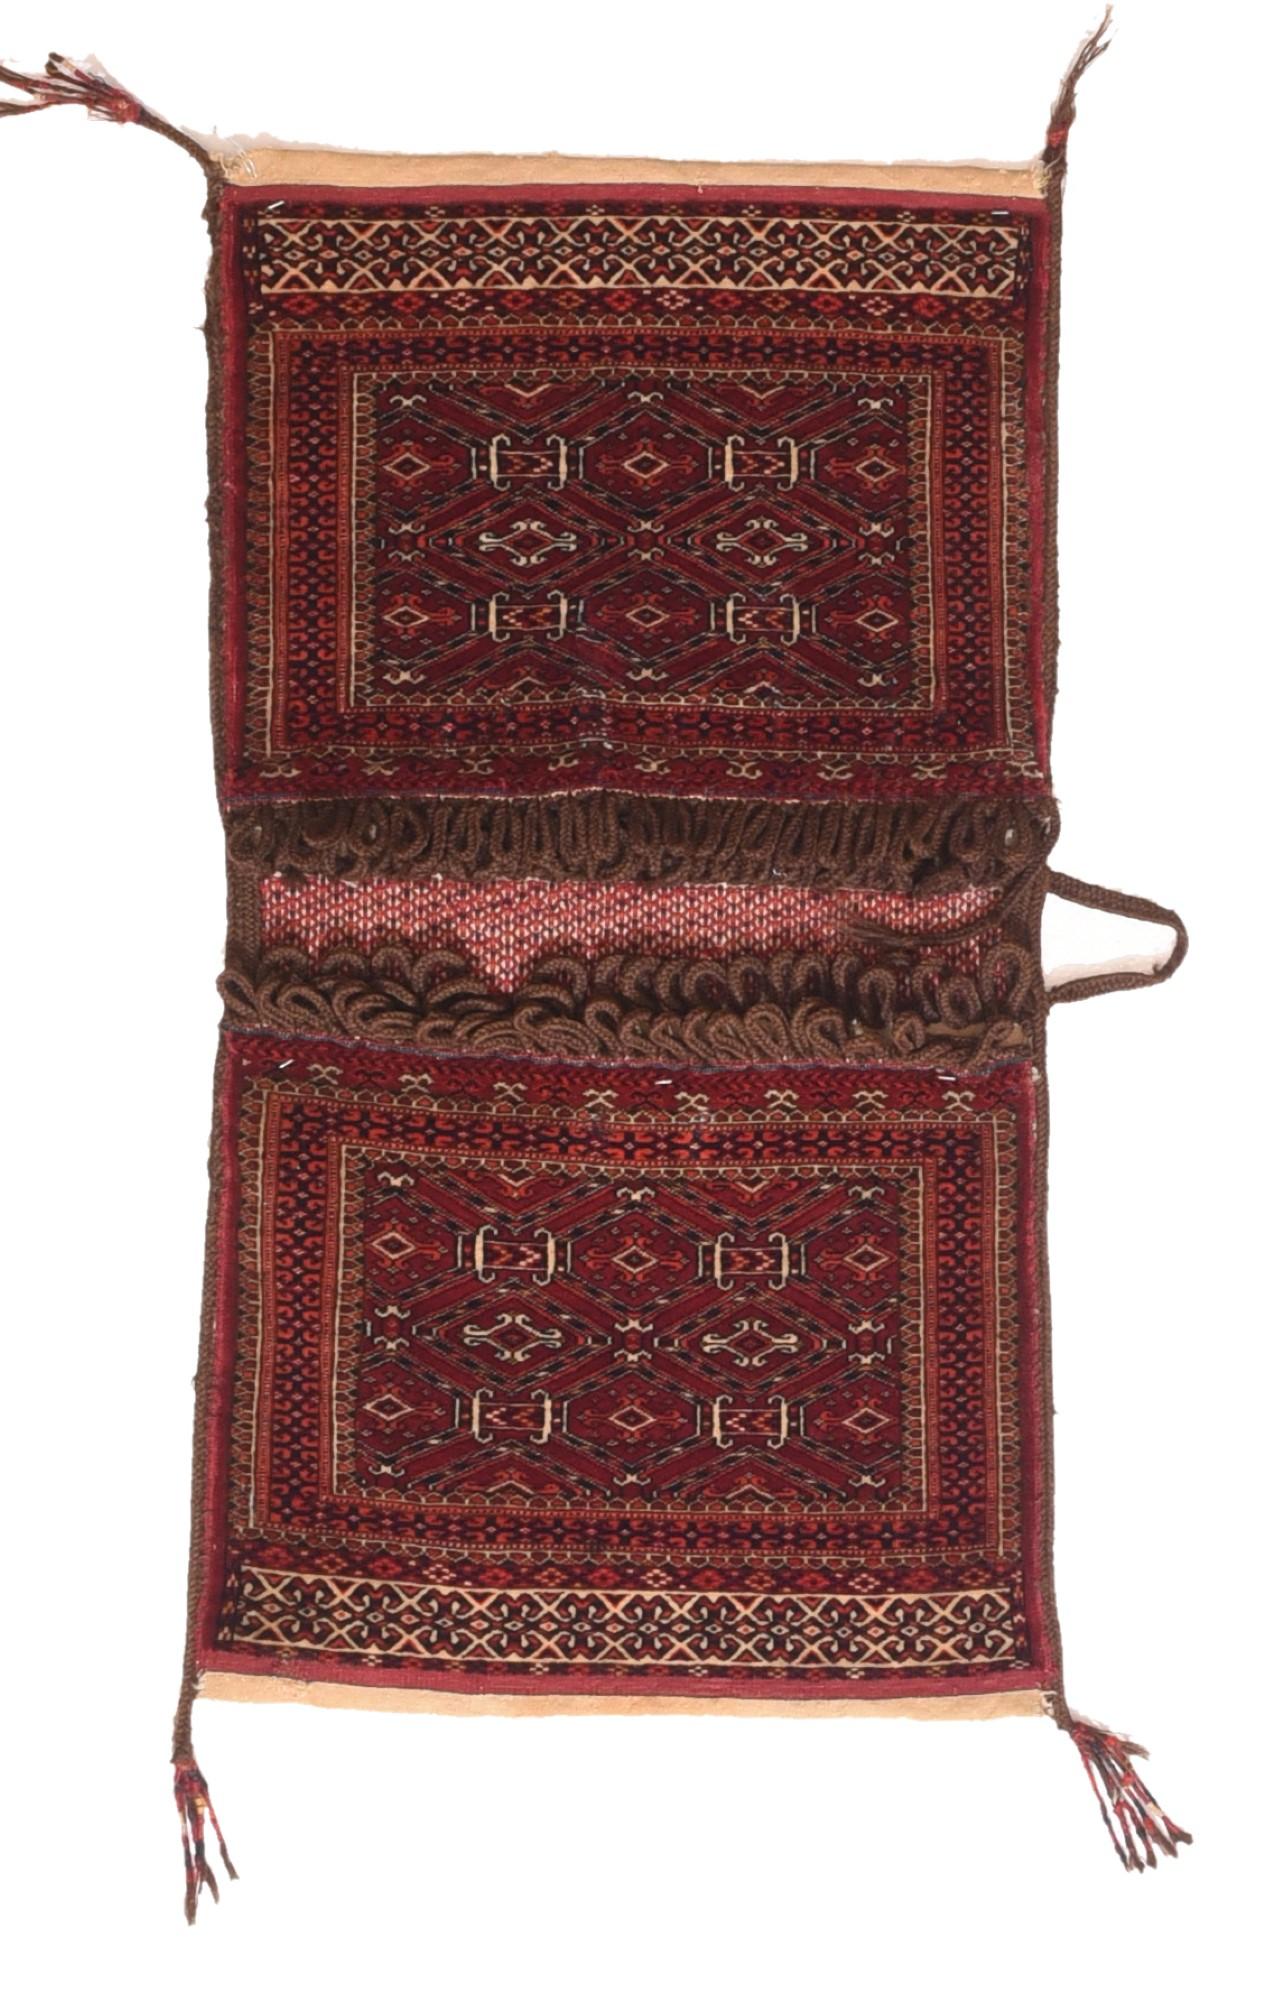 Early 20th Century Antique Turkmen Bag 1'6'' x 1'6'' For Sale